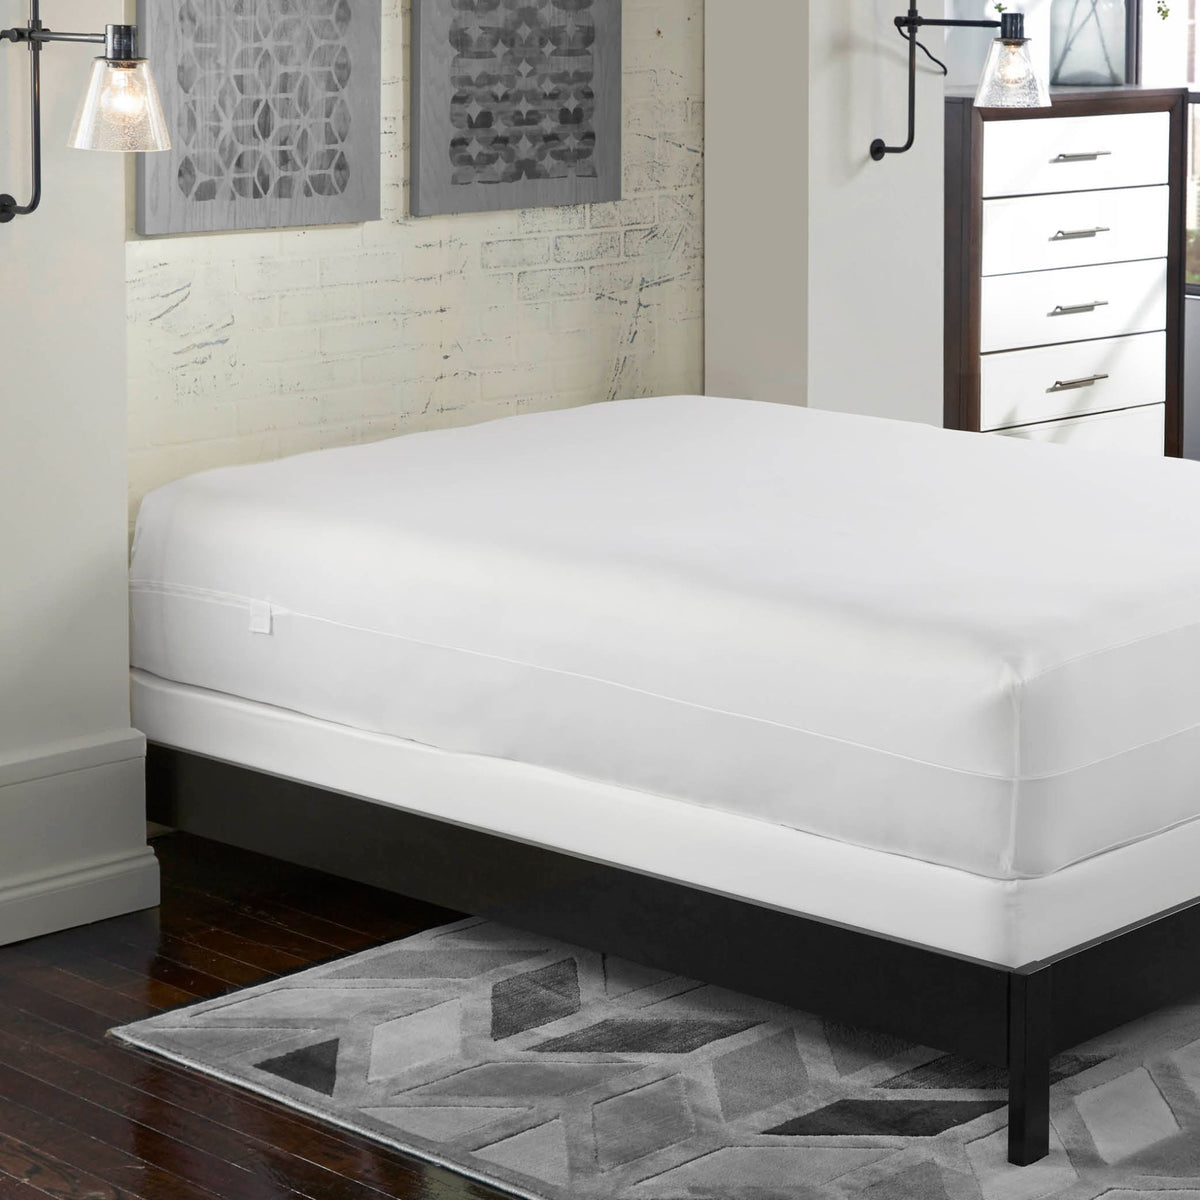 EveryCare  KosmoCare Bed & Linen Protector (Medium)